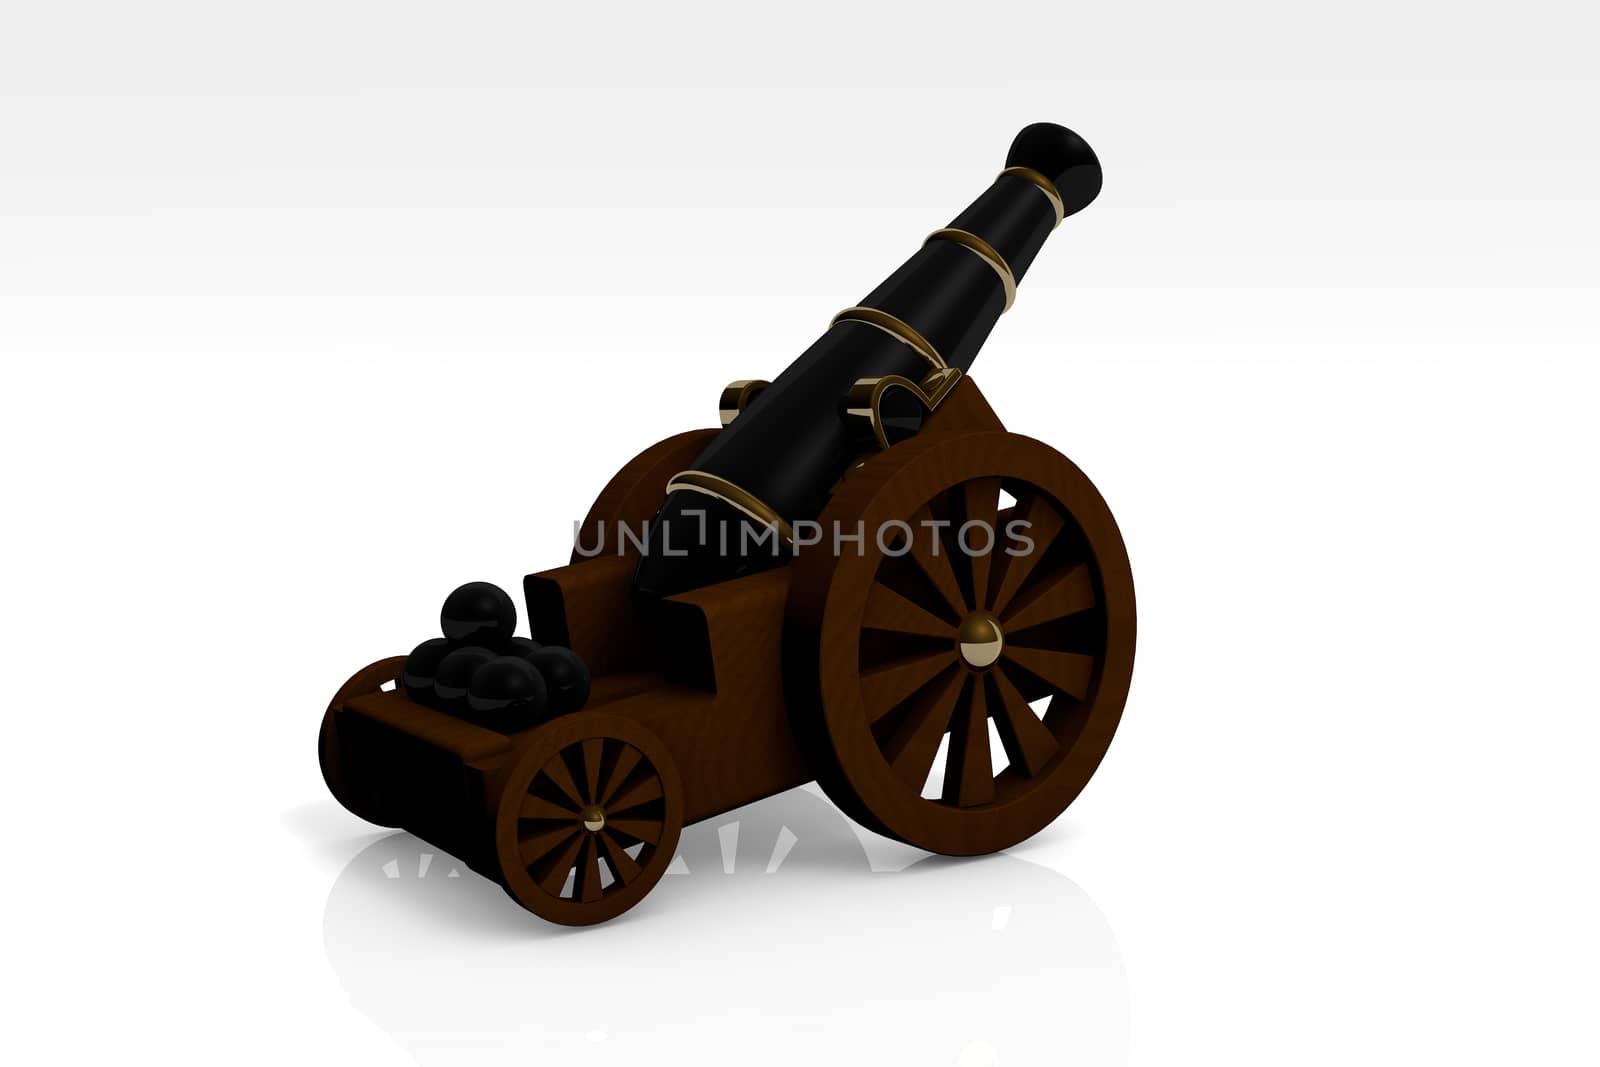 Medieval artillery gun on a wooden carriage  by alexx60